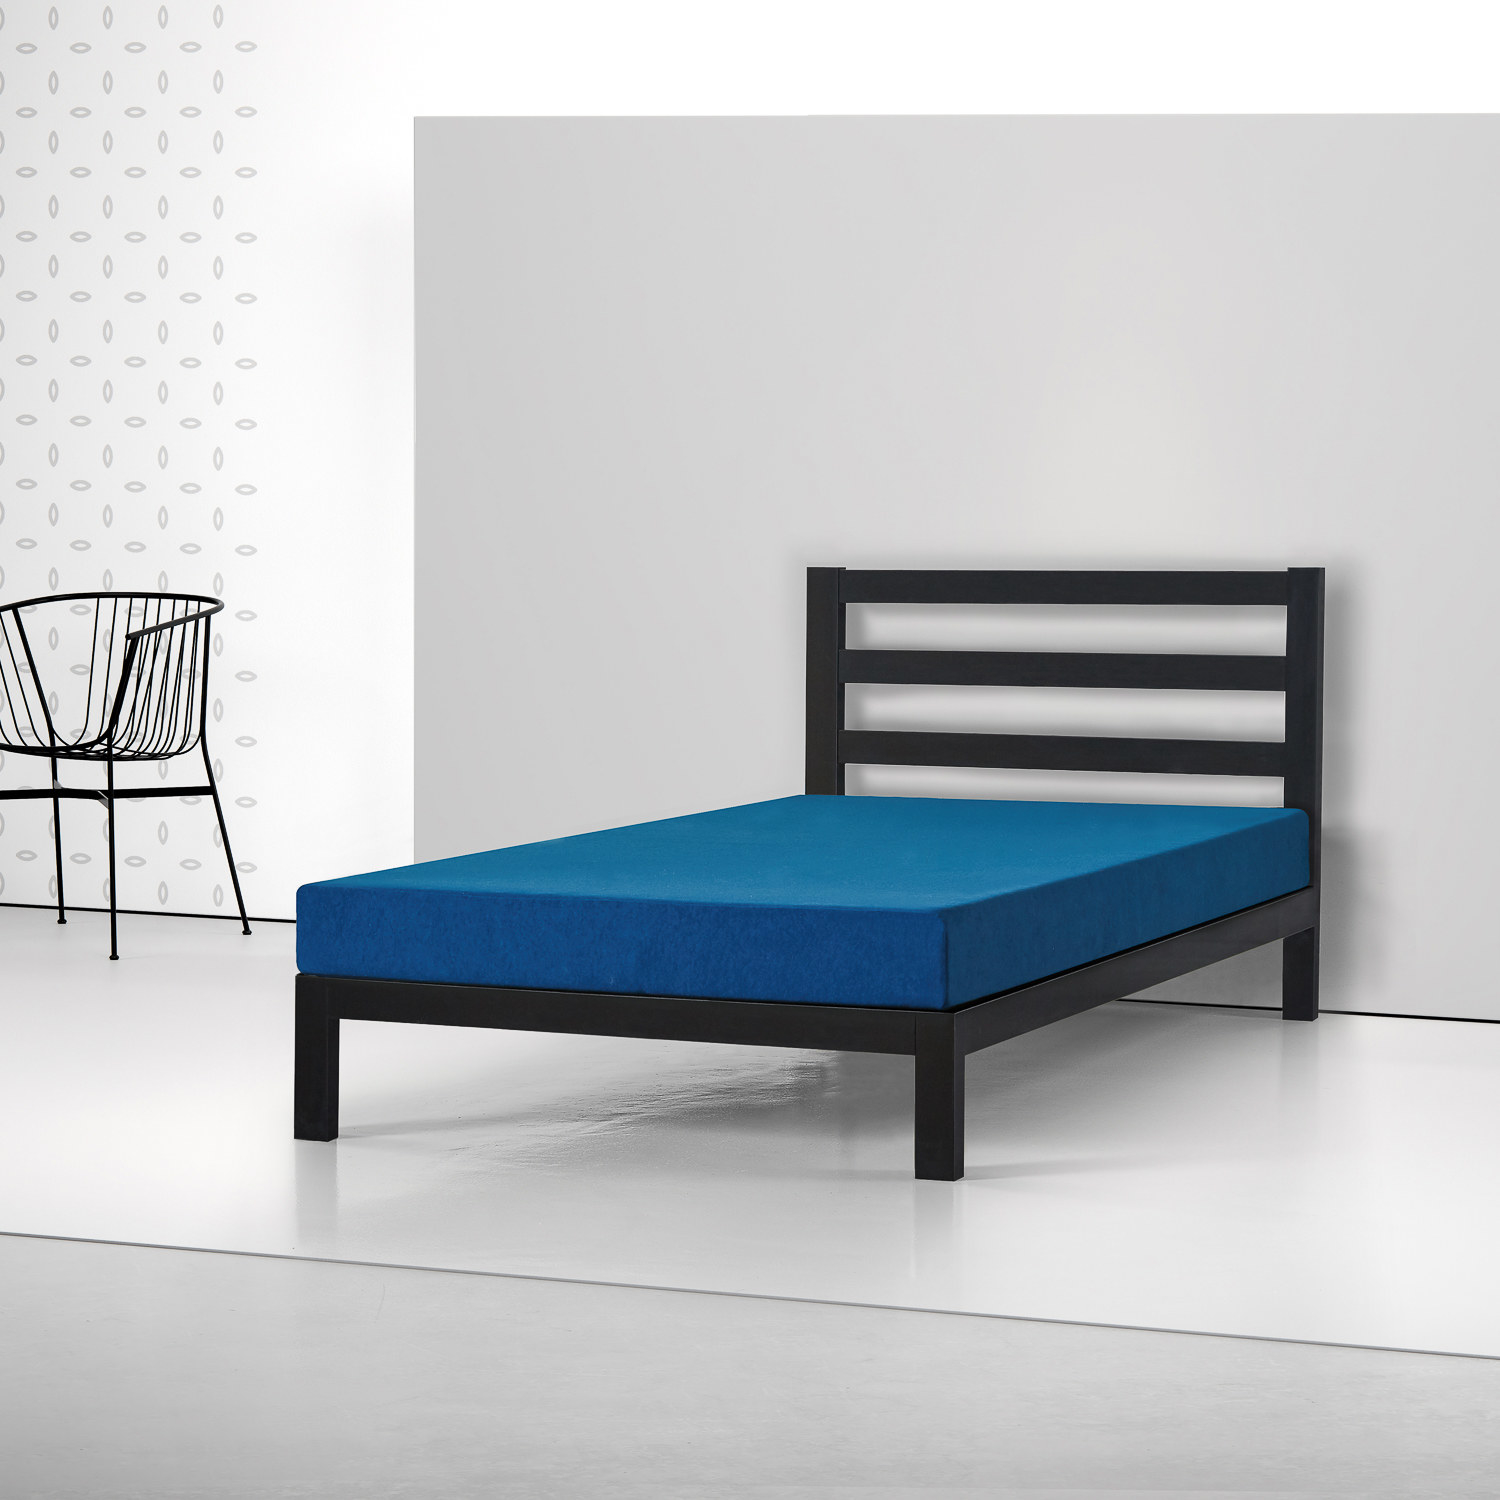 The blue mattress on a black metal bed frame